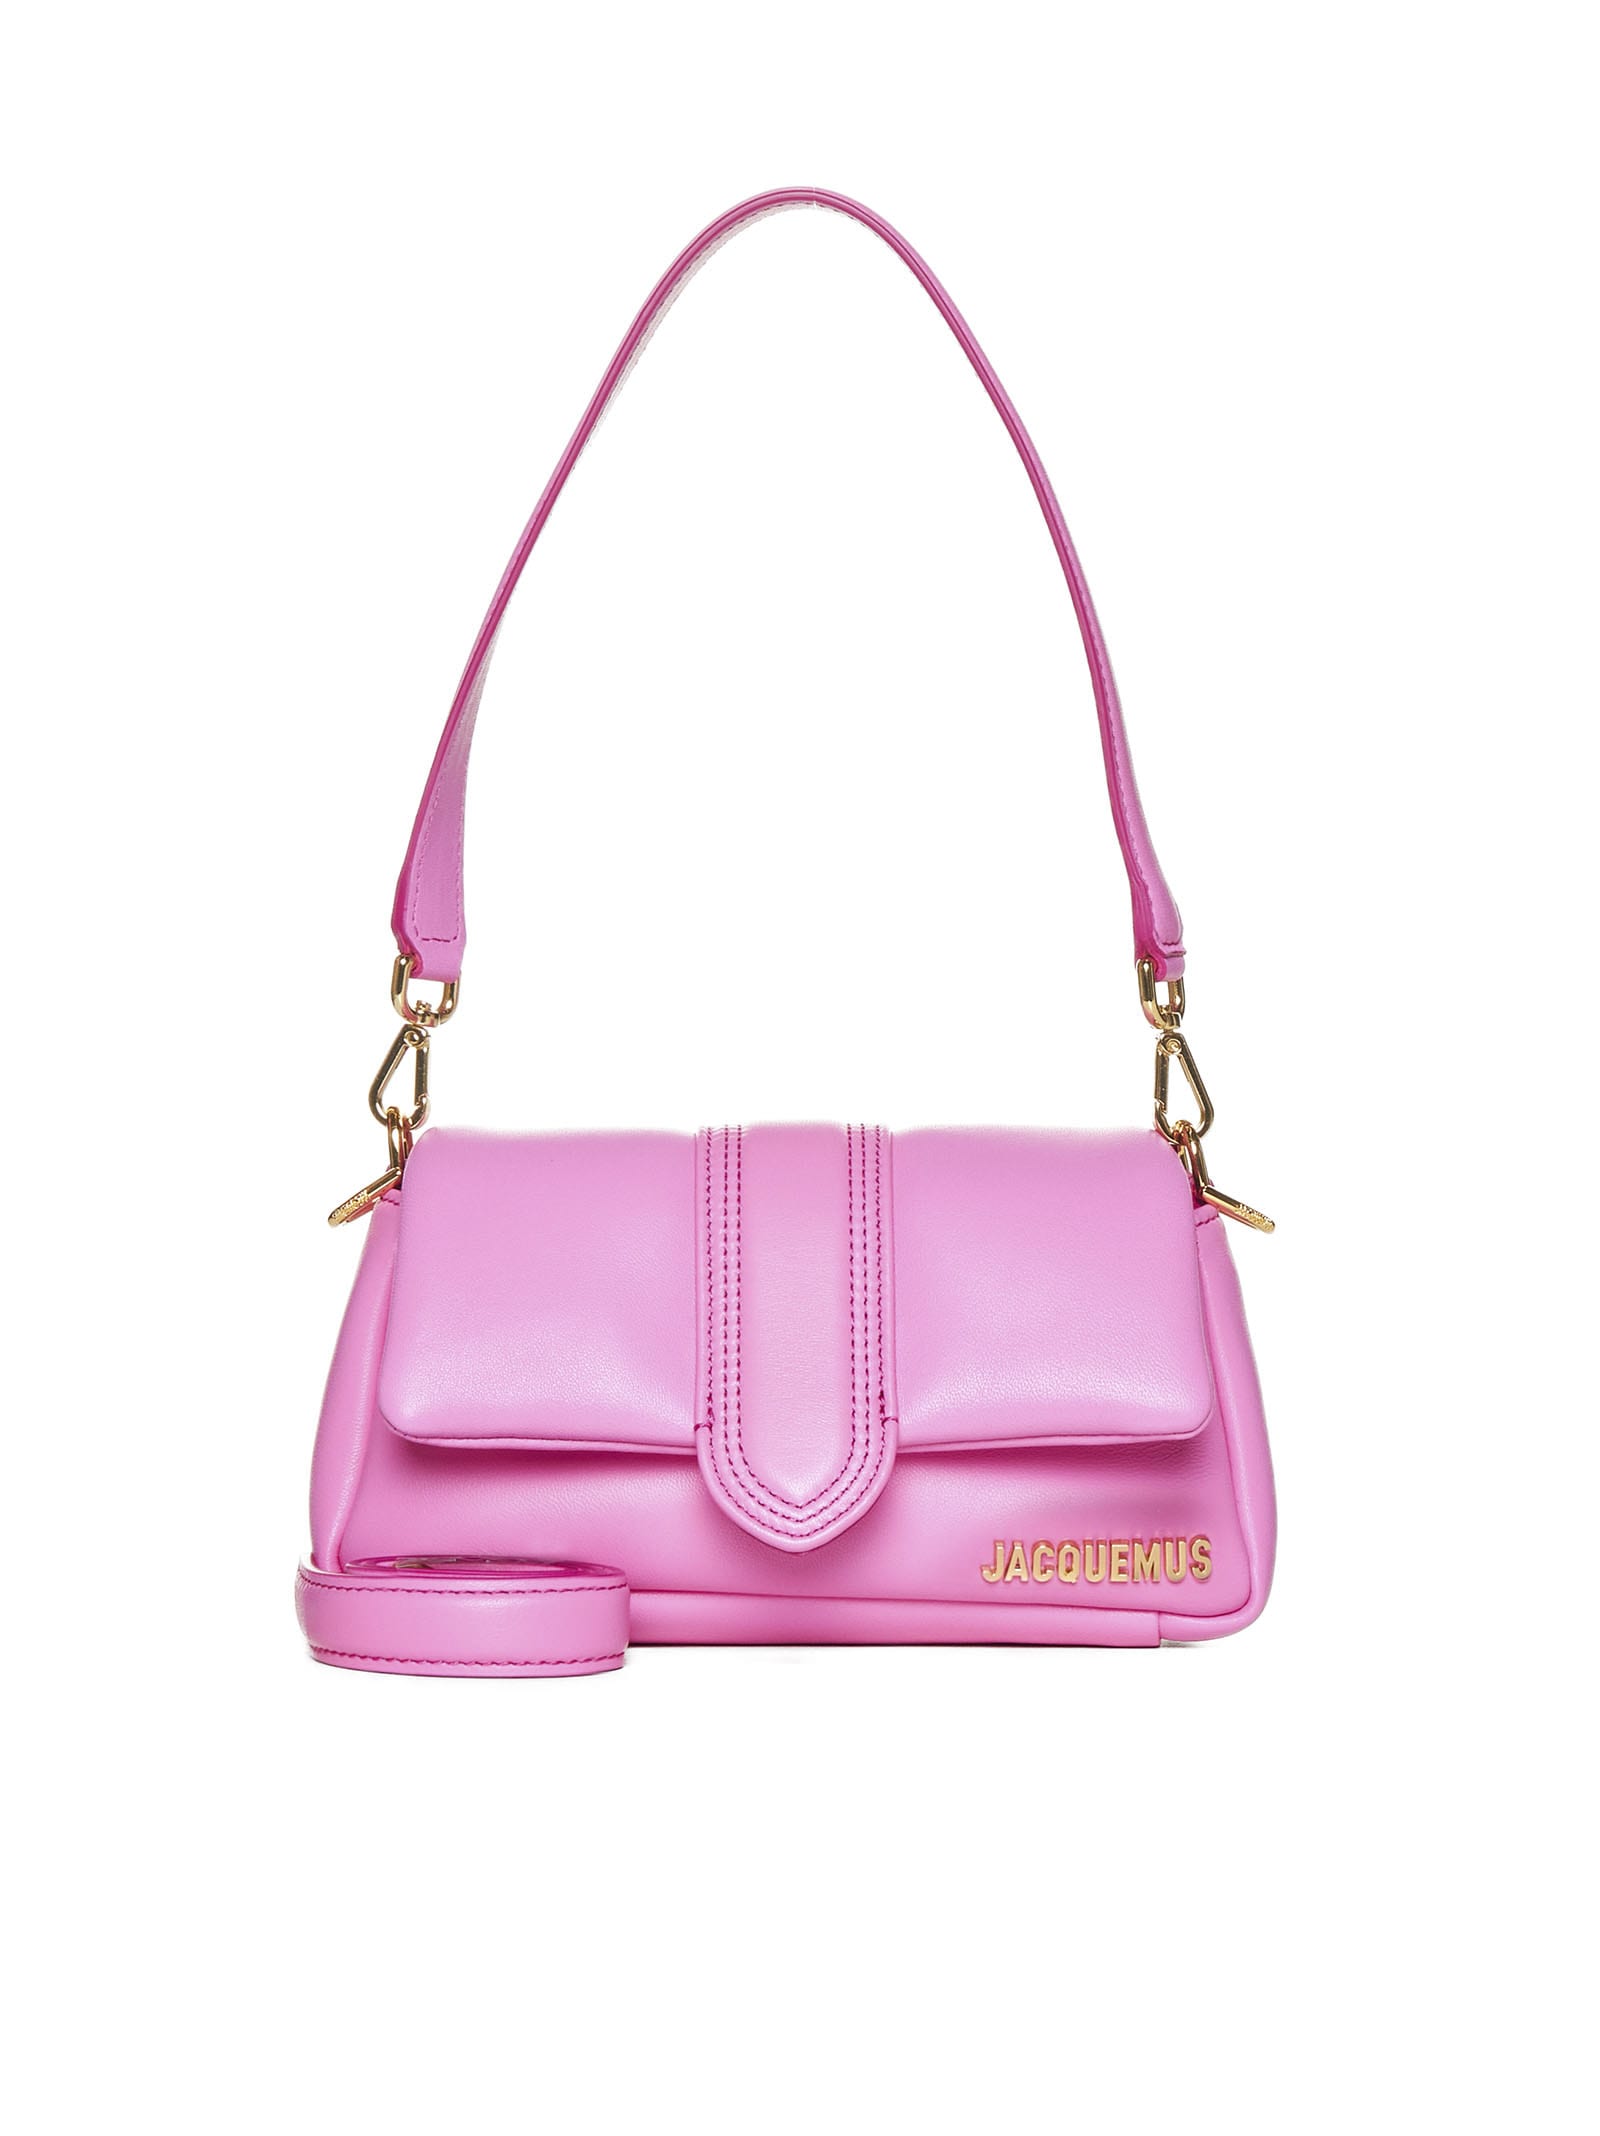 Jacquemus Shoulder Bag In Neon Pink